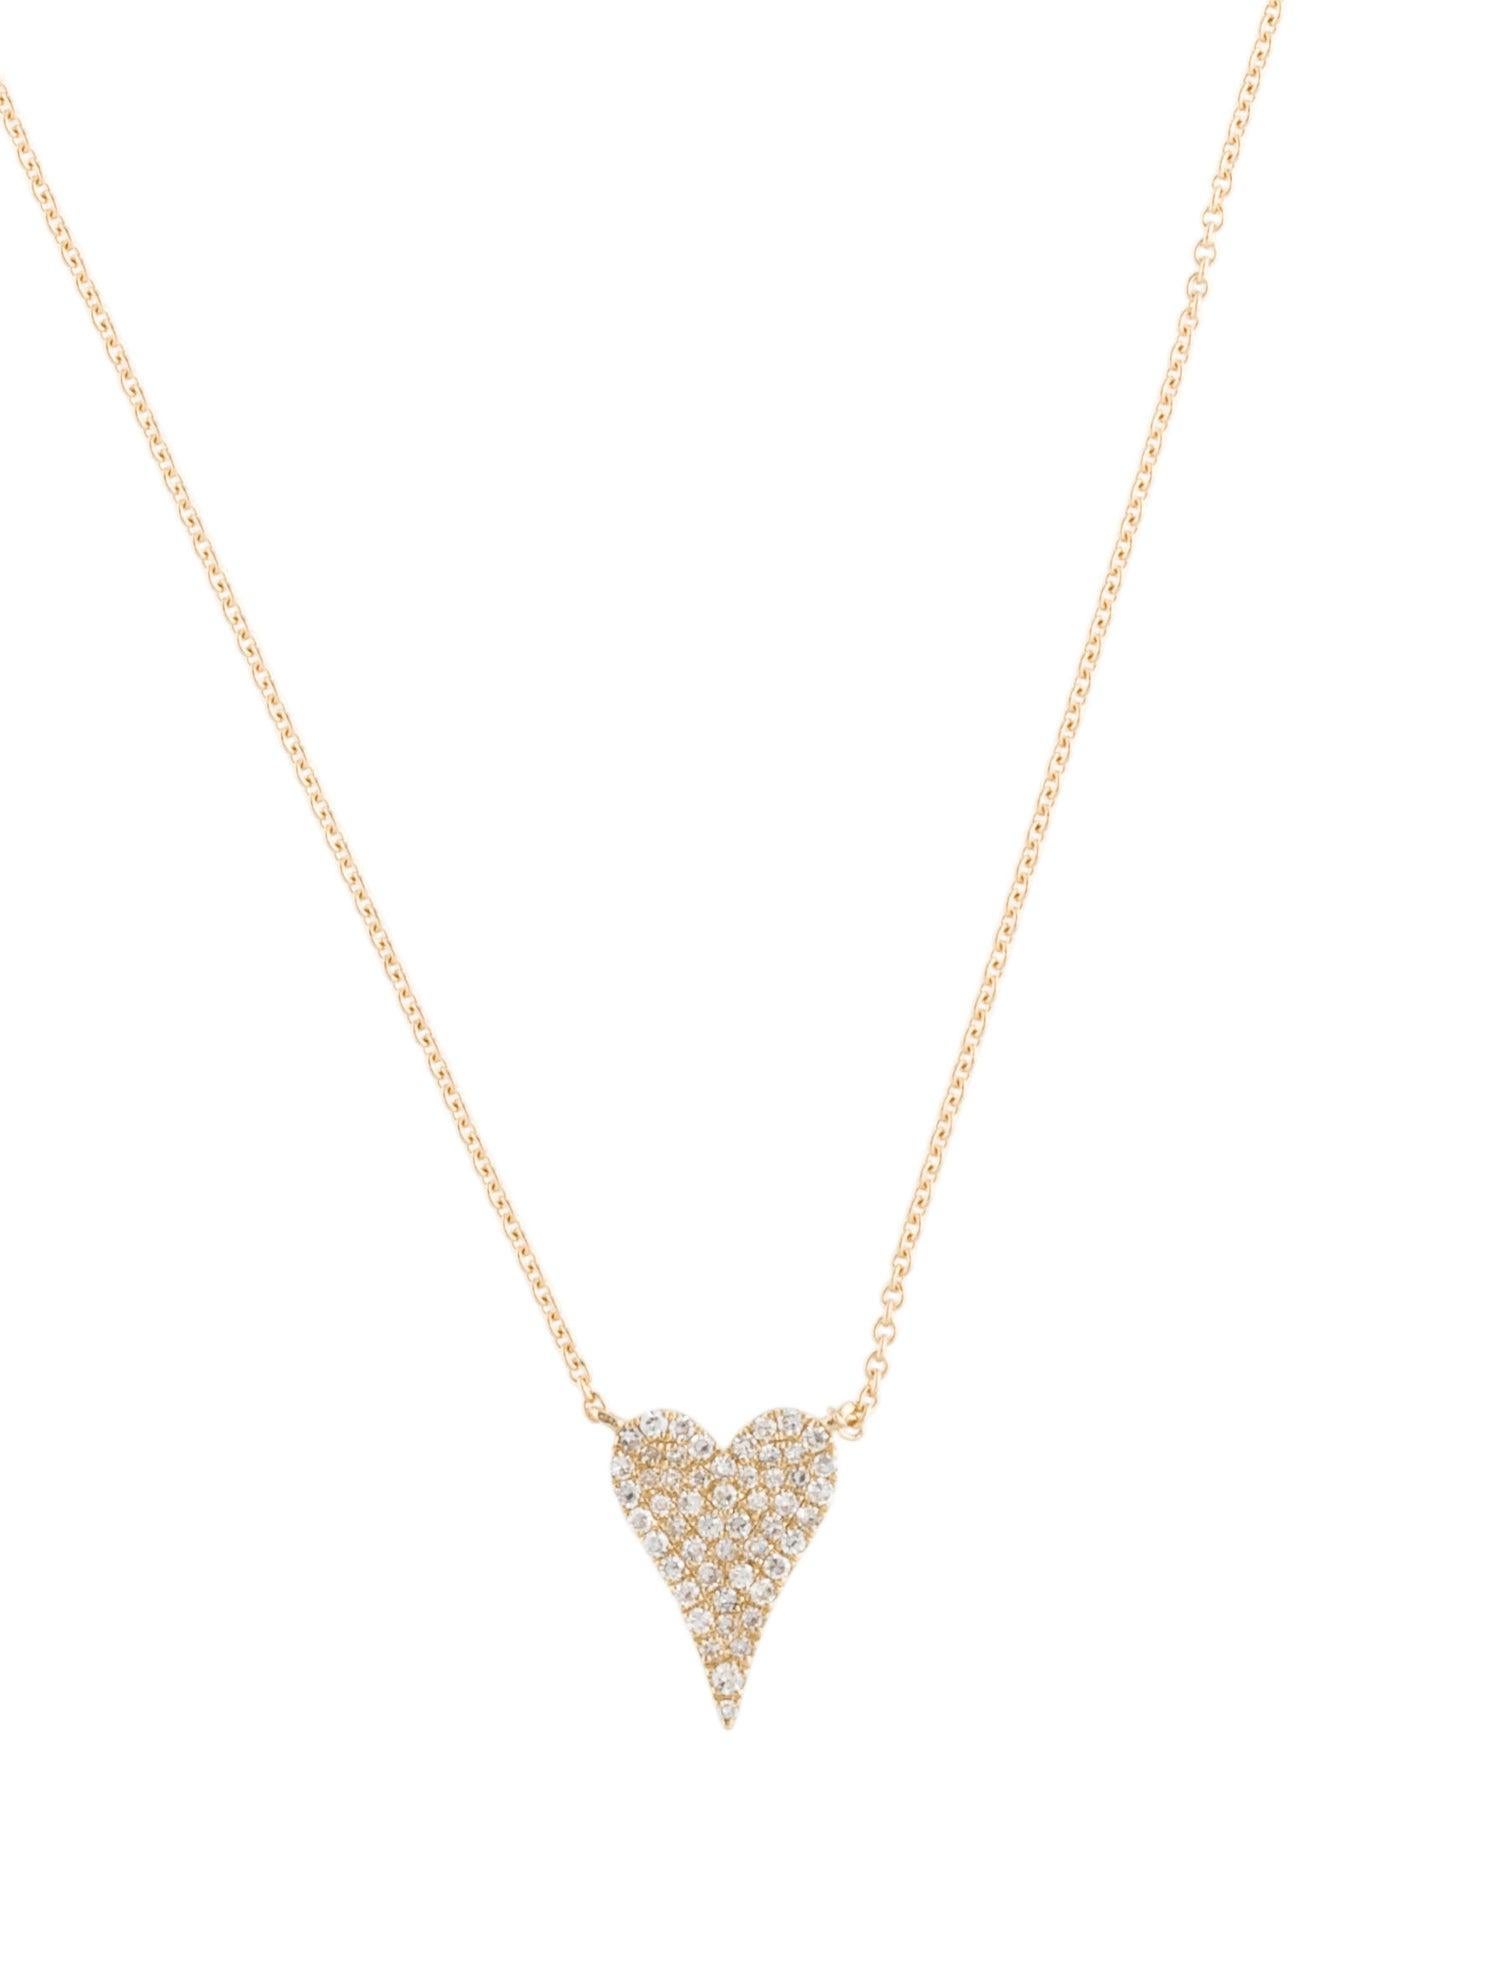 14 Karat Yellow Gold 0.13 Carat Diamond Heart Pendant Necklace For Sale 1